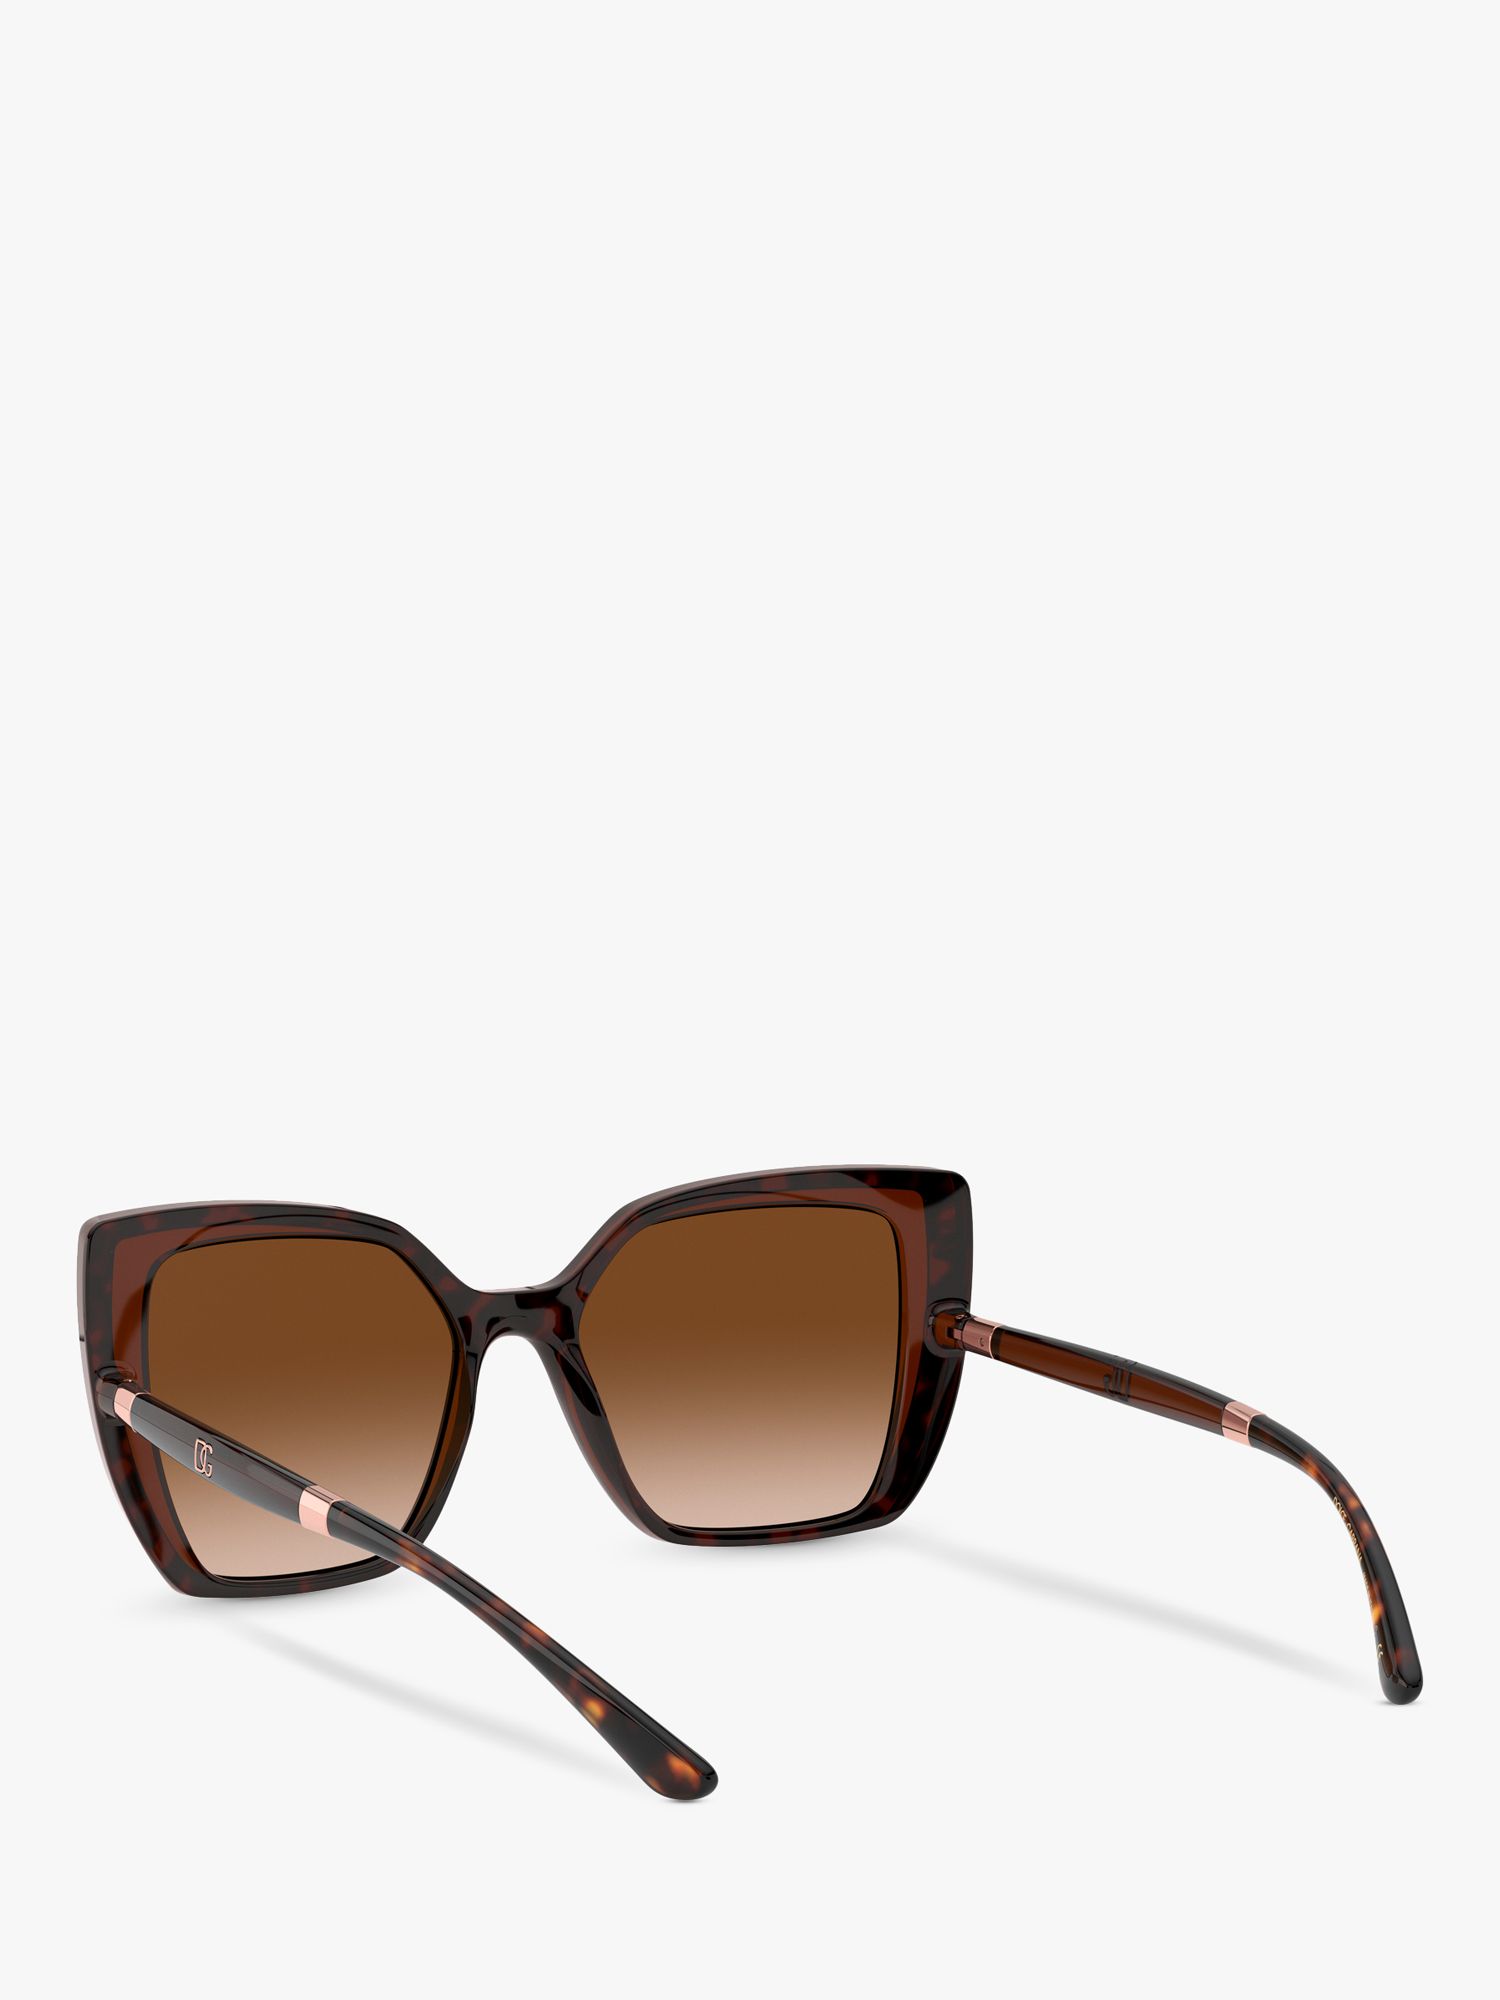 Dolce & Gabbana DG6138 Women's Butterfly Sunglasses, Brown/Brown Gradient